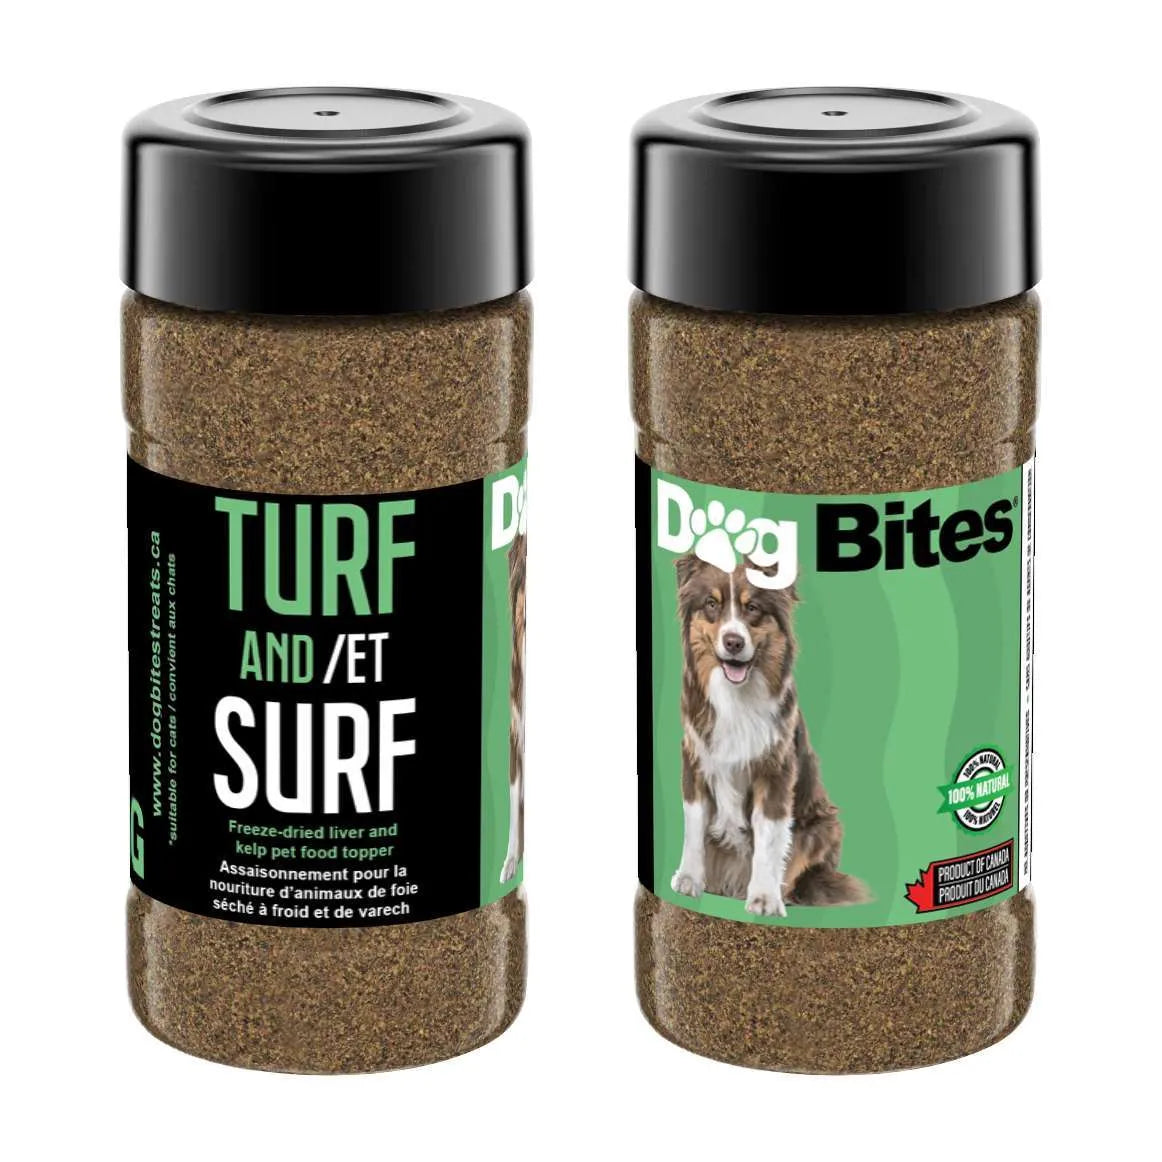 Dog Bites - Turf and Surf - Pet Food Topper